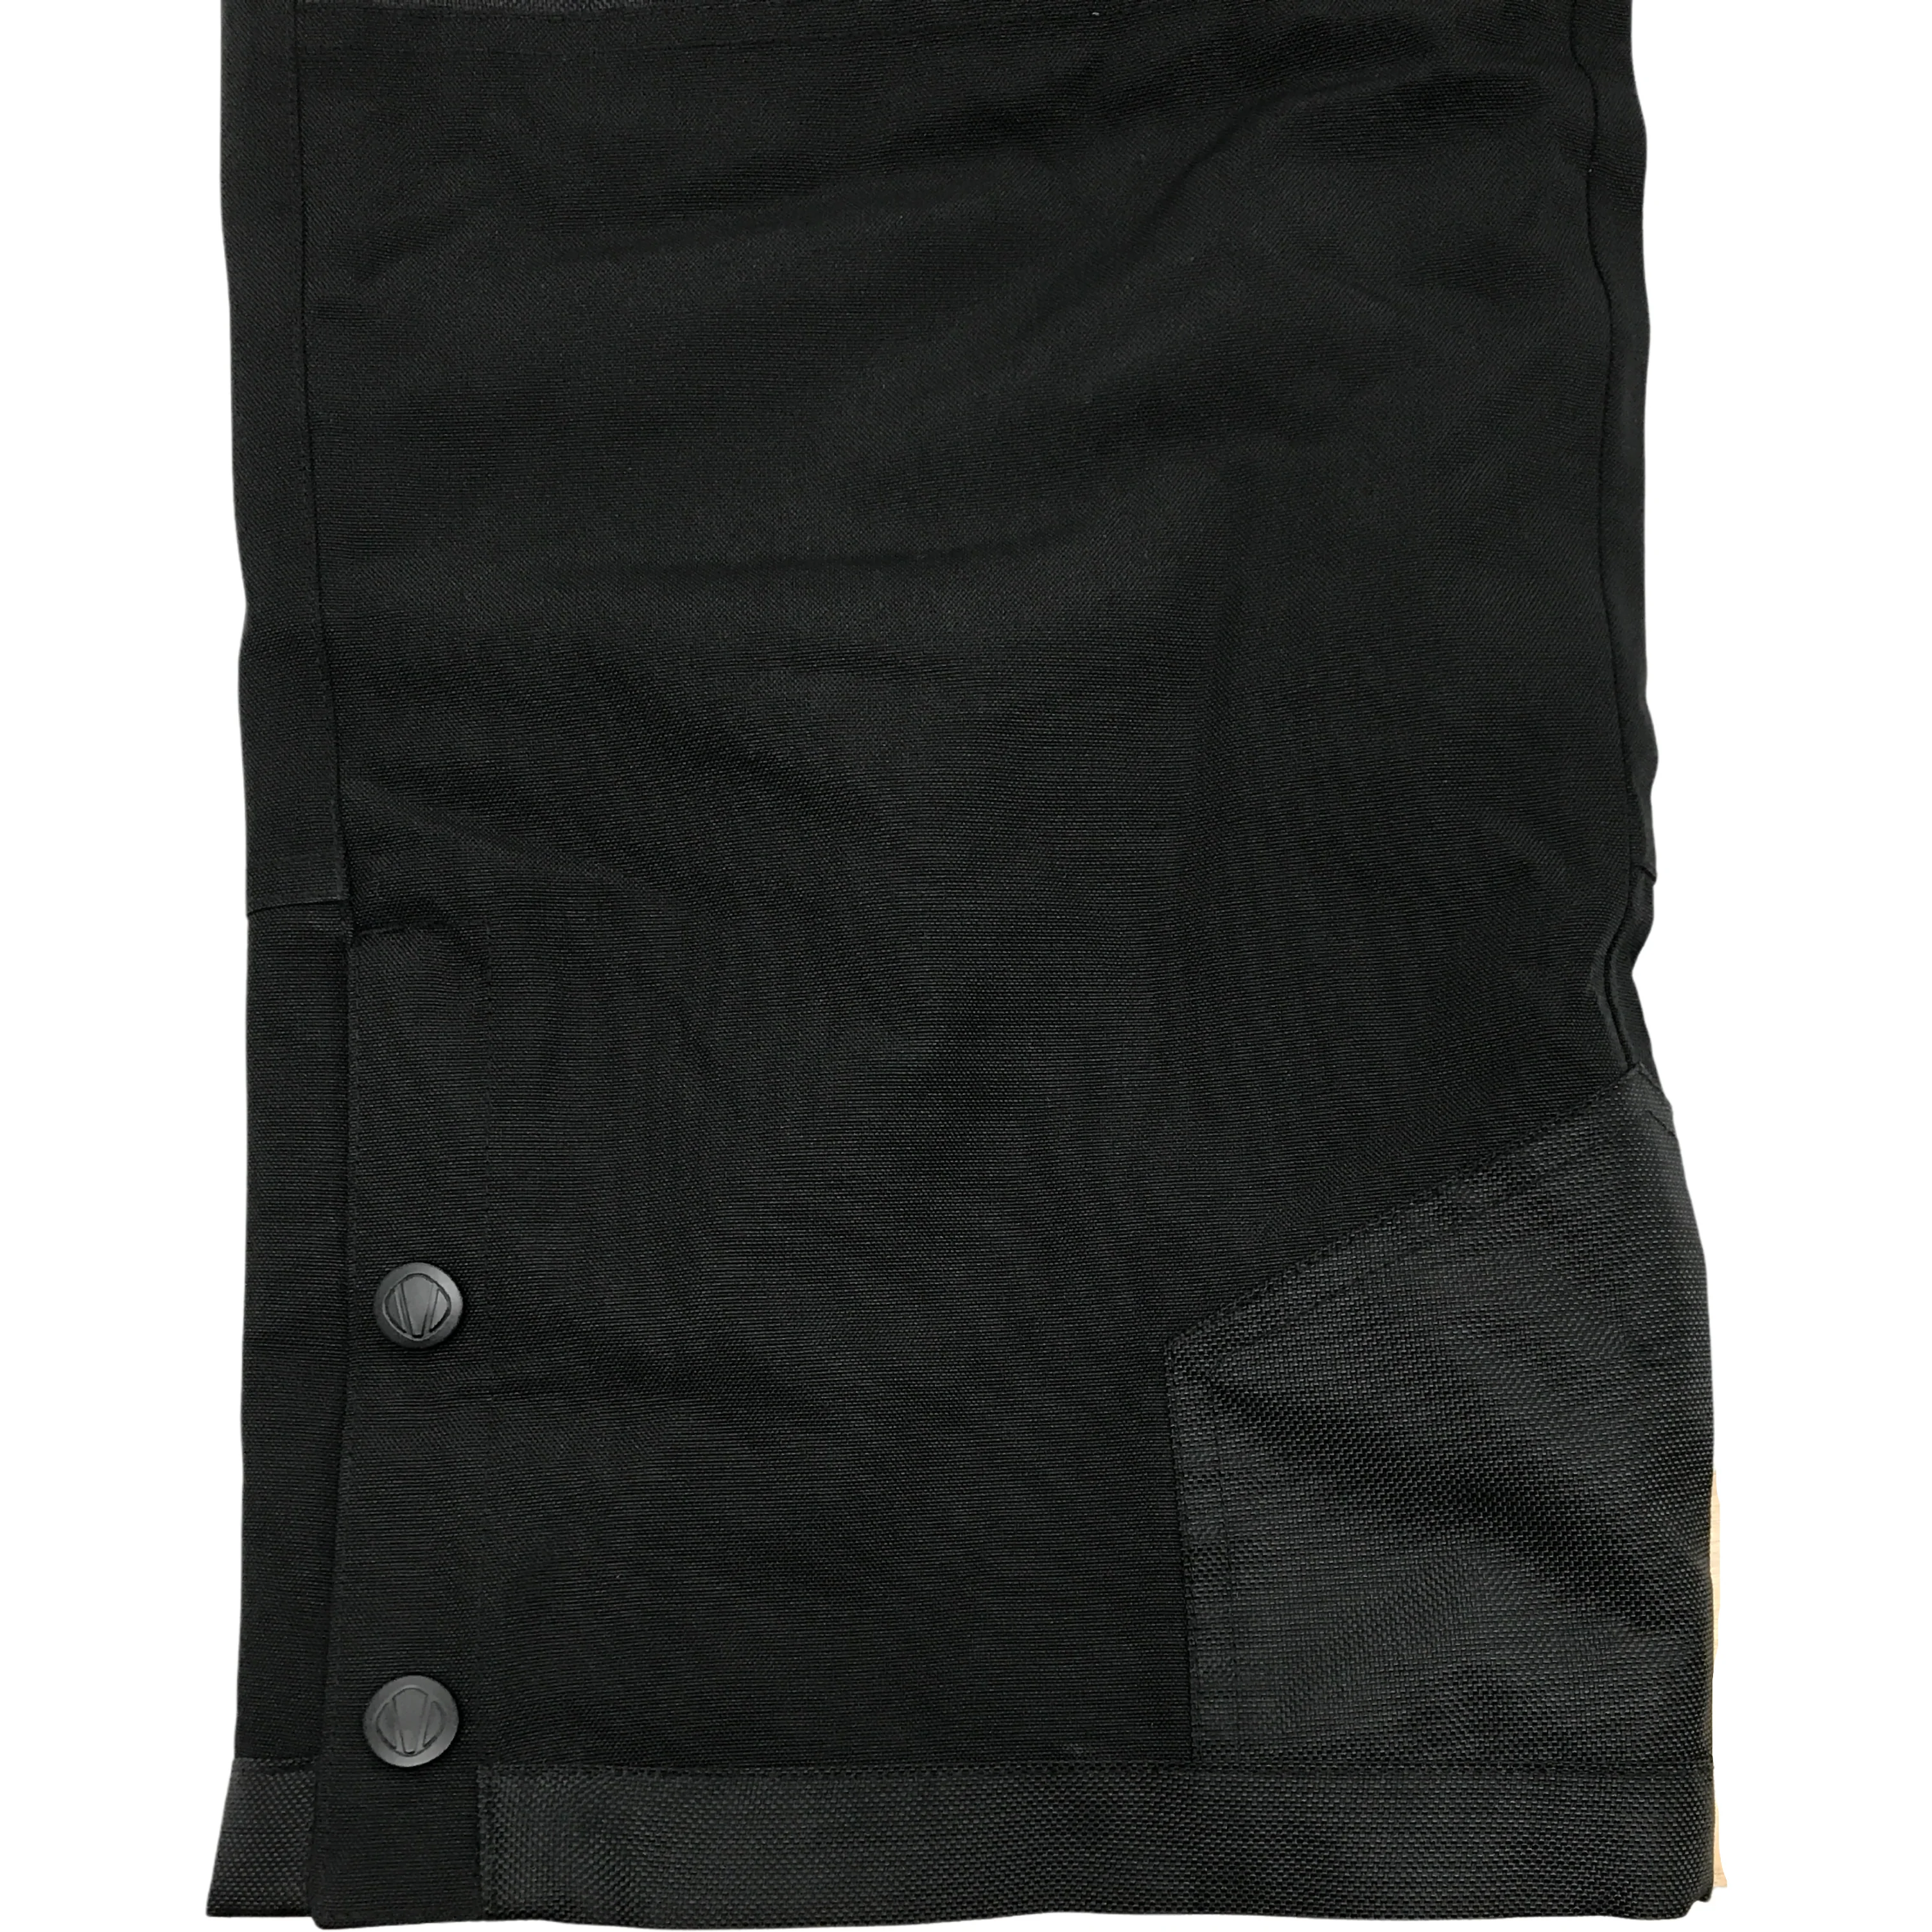 Stormpack Men's Snow Pants / Outdoor Activity Pants / Black / Various Sizes **No Tags**